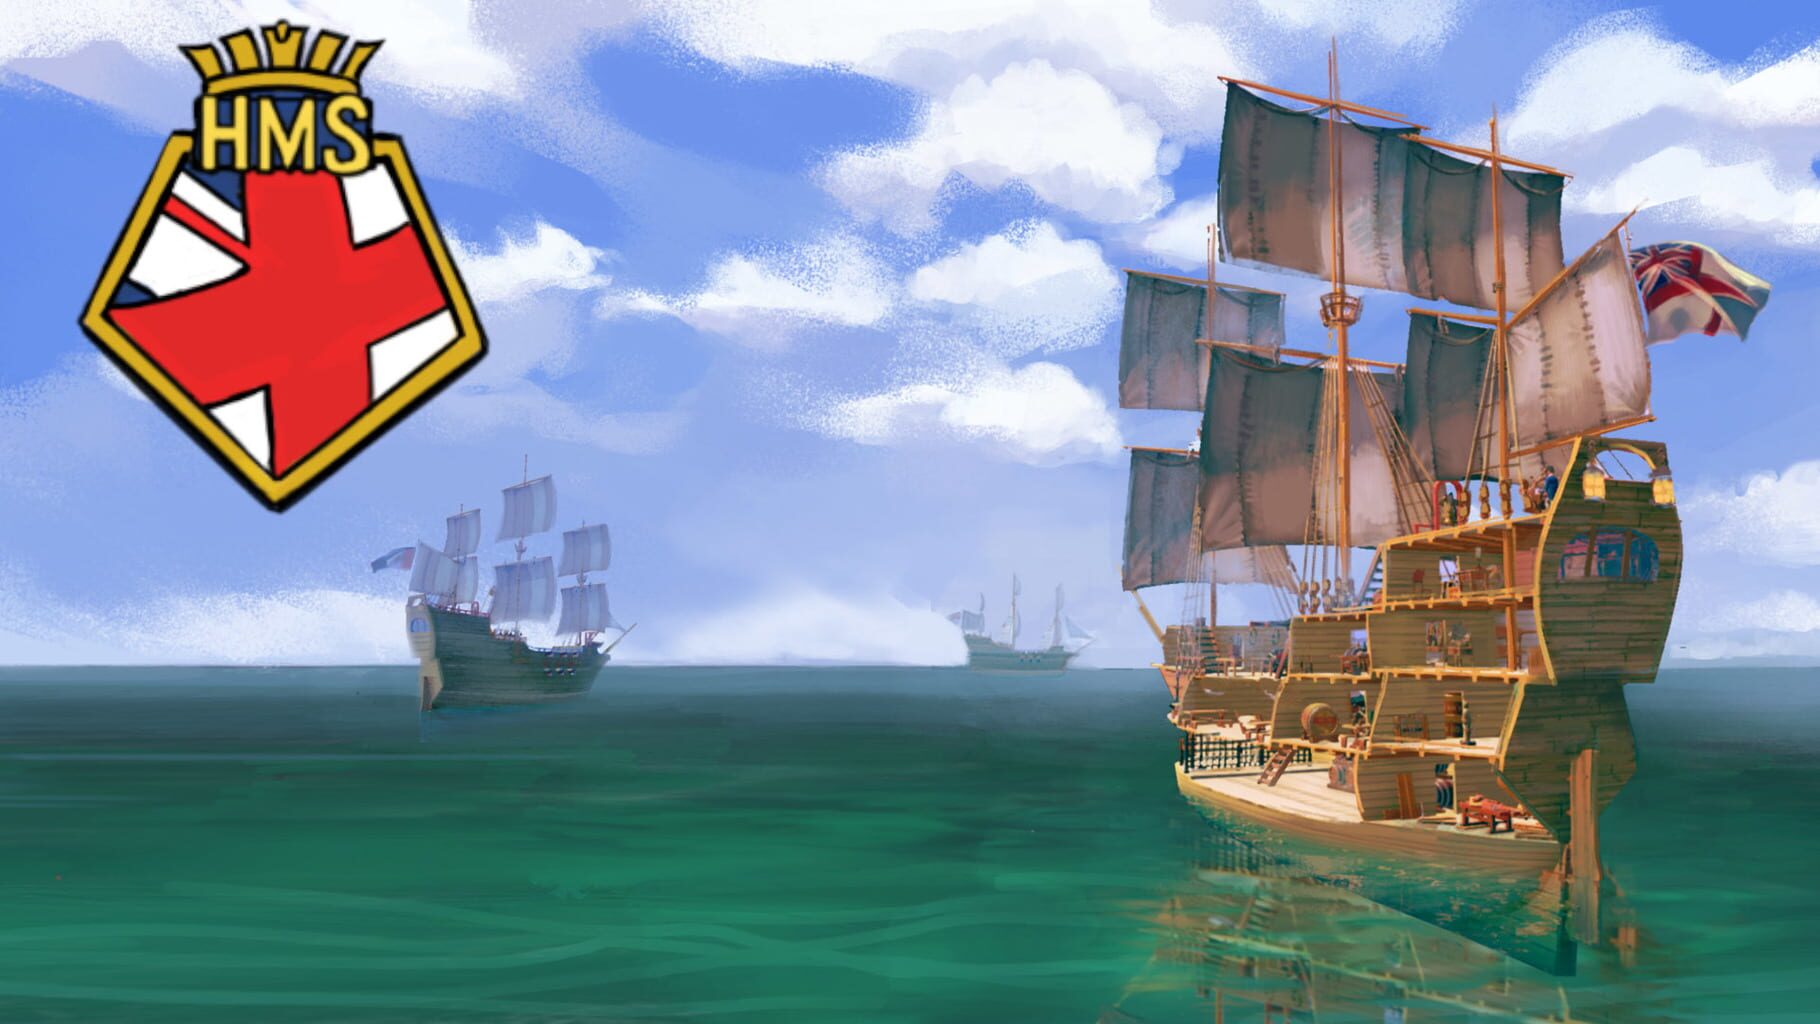 Her Majesty's Ship artwork